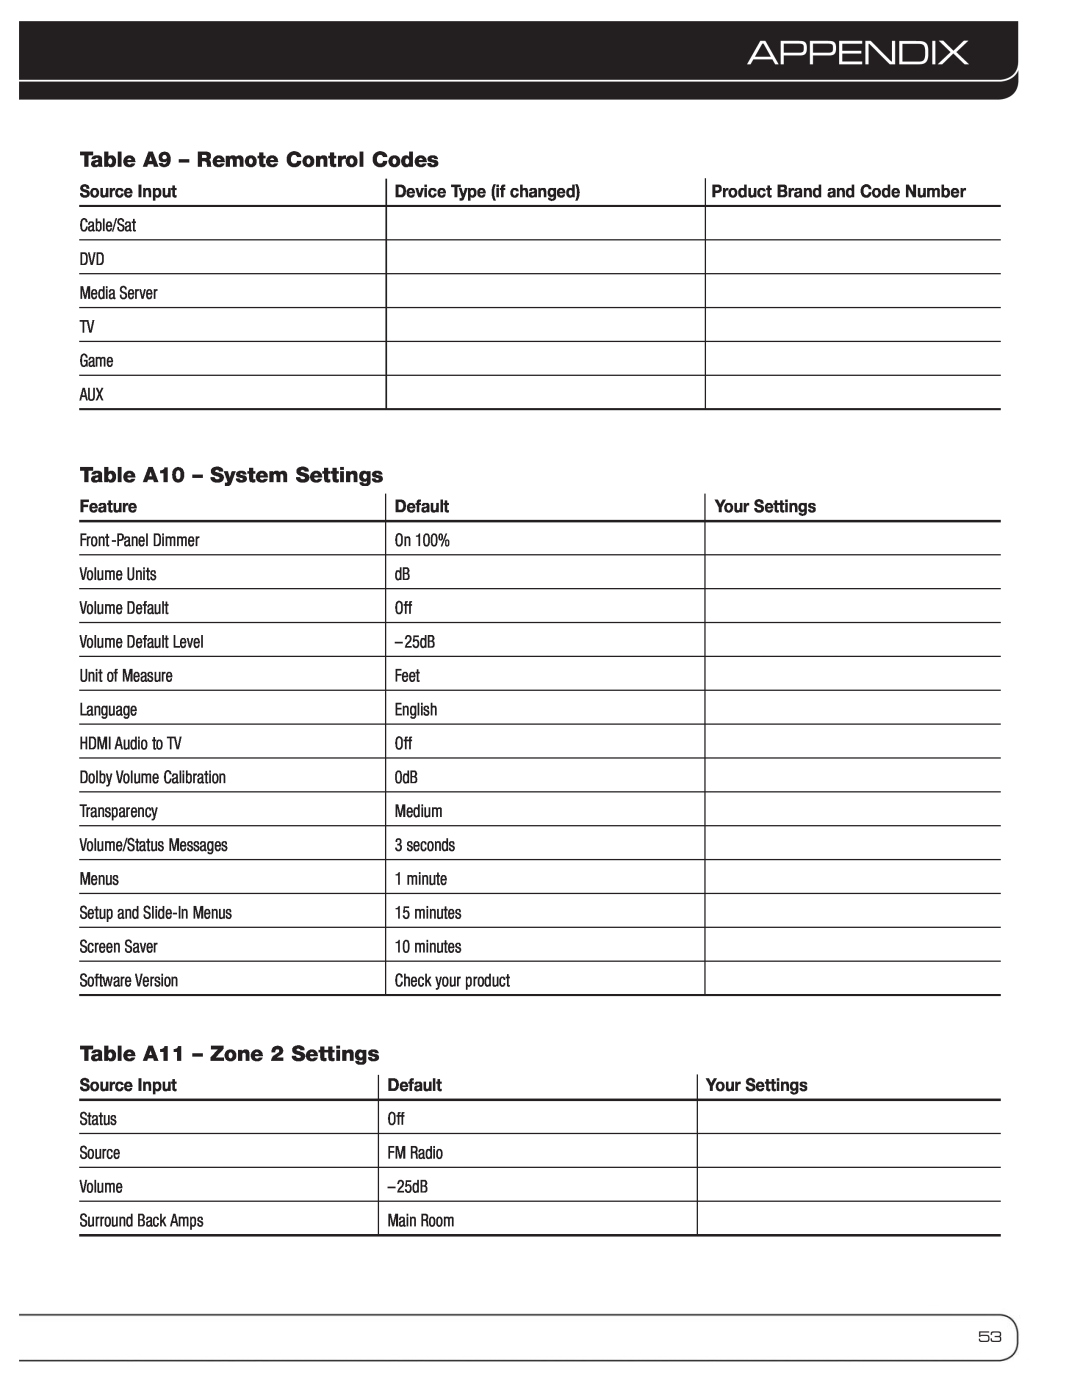 Harman-Kardon AVR 3600 Table A9 – Remote Control Codes, Table A10 – System Settings, Table A11 – Zone 2 Settings, Appendix 